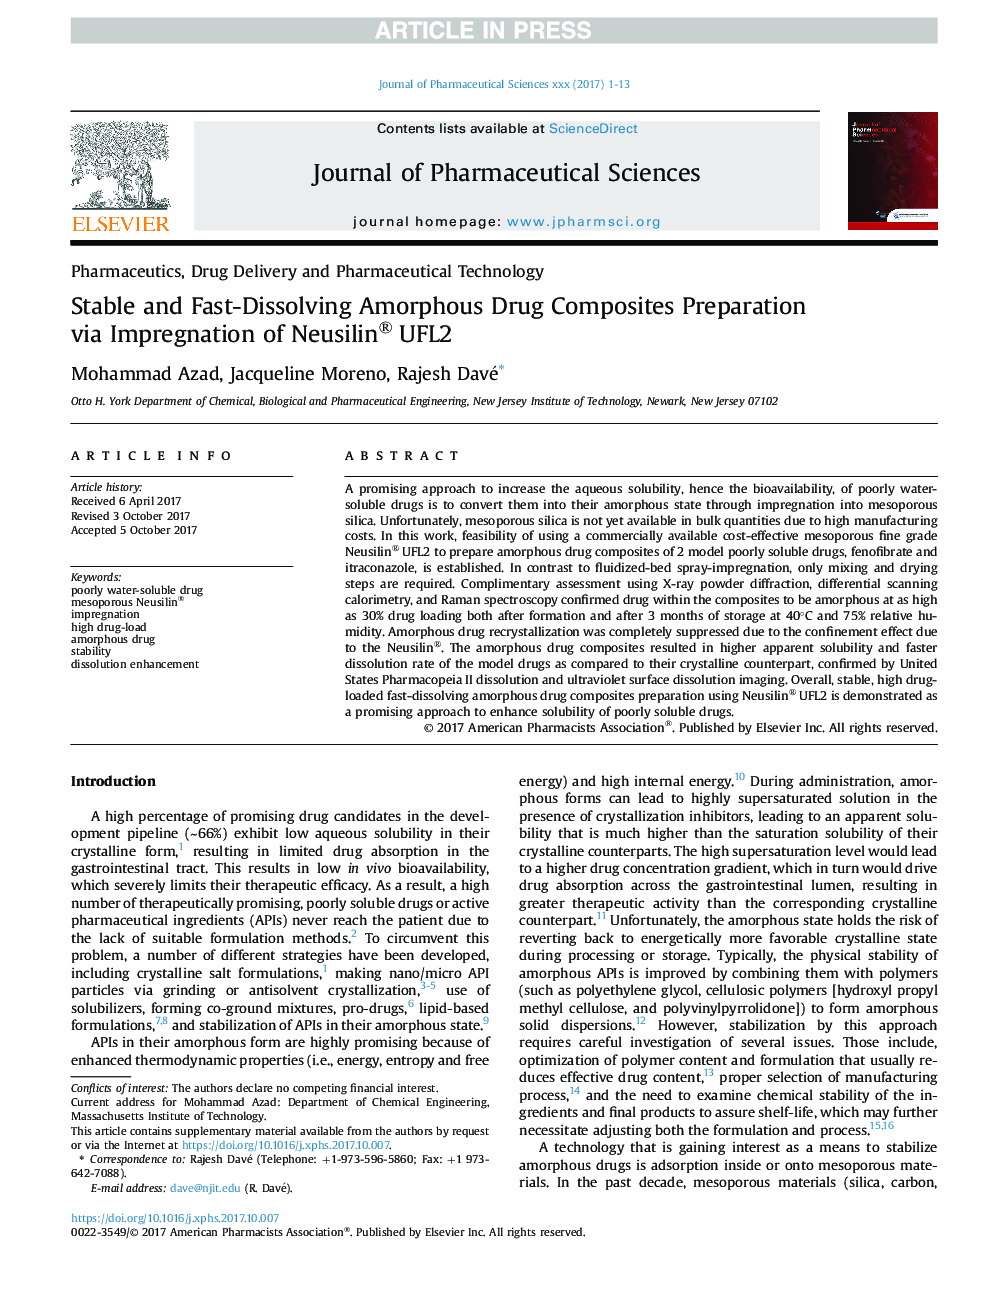 Stable and Fast-Dissolving Amorphous Drug Composites Preparation via Impregnation of Neusilin® UFL2